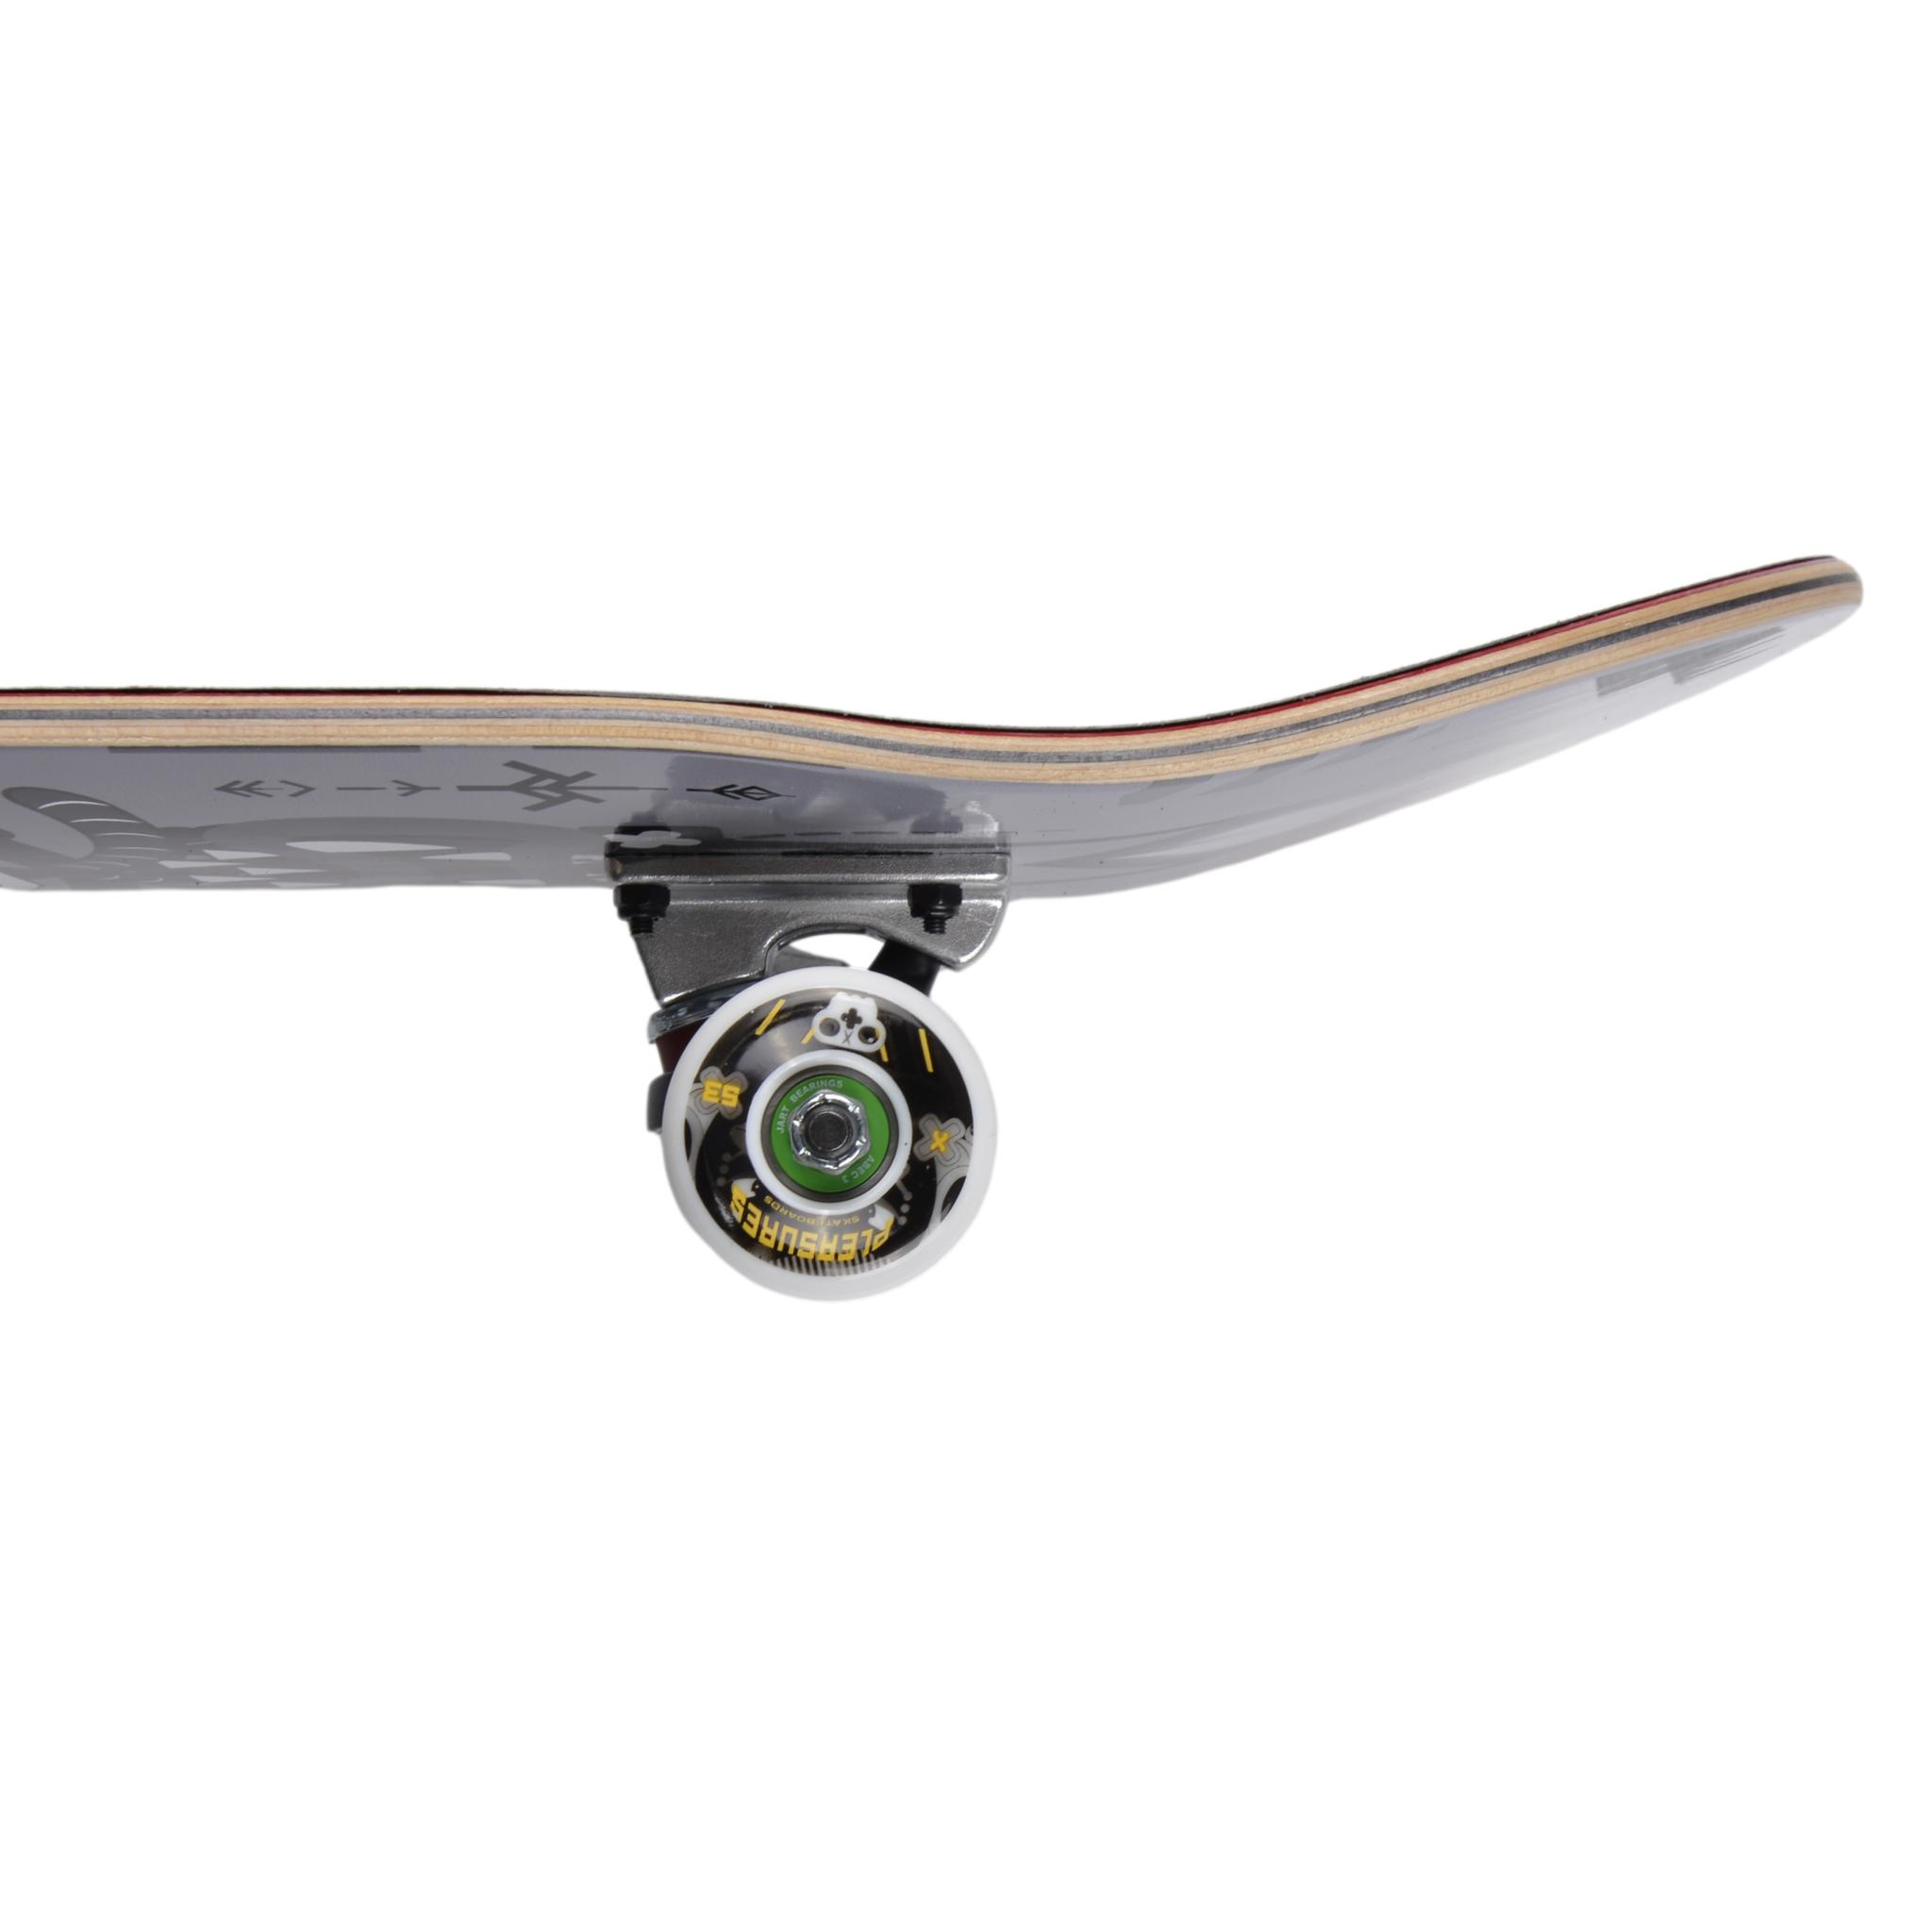 Pleasures skateboards Excalibur completo pro